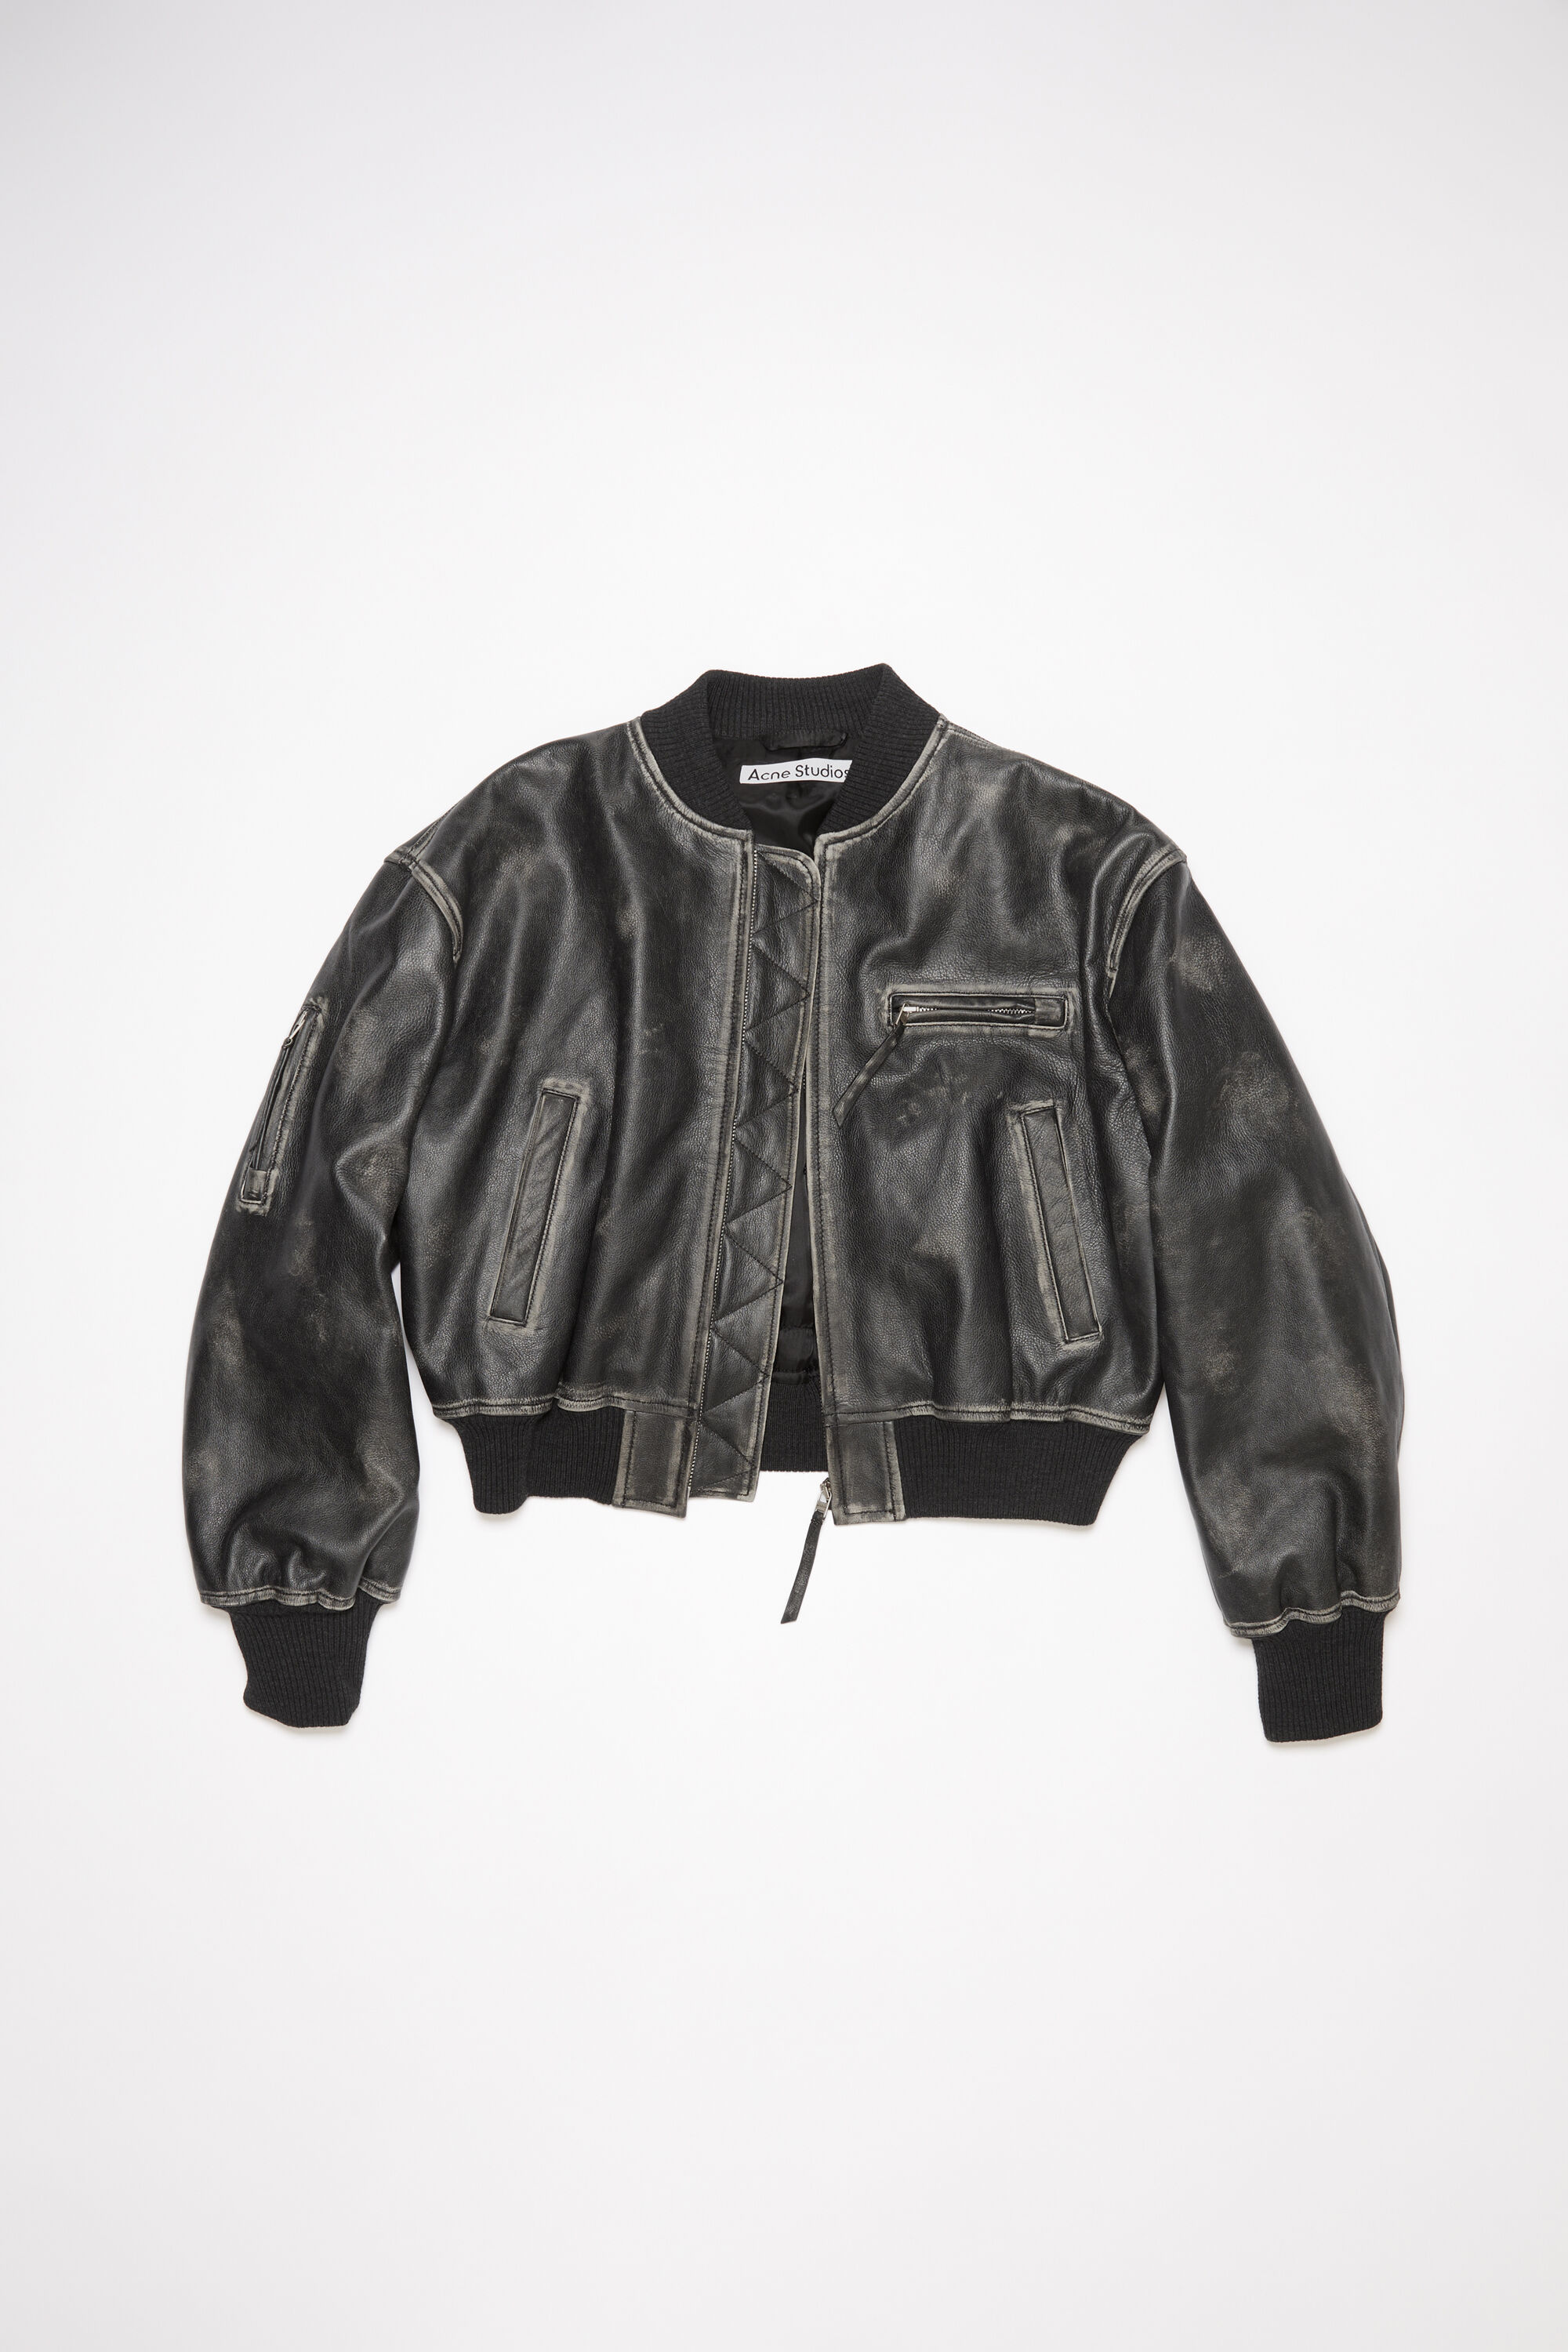 Acne Studios - Leather bomber jacket - Black